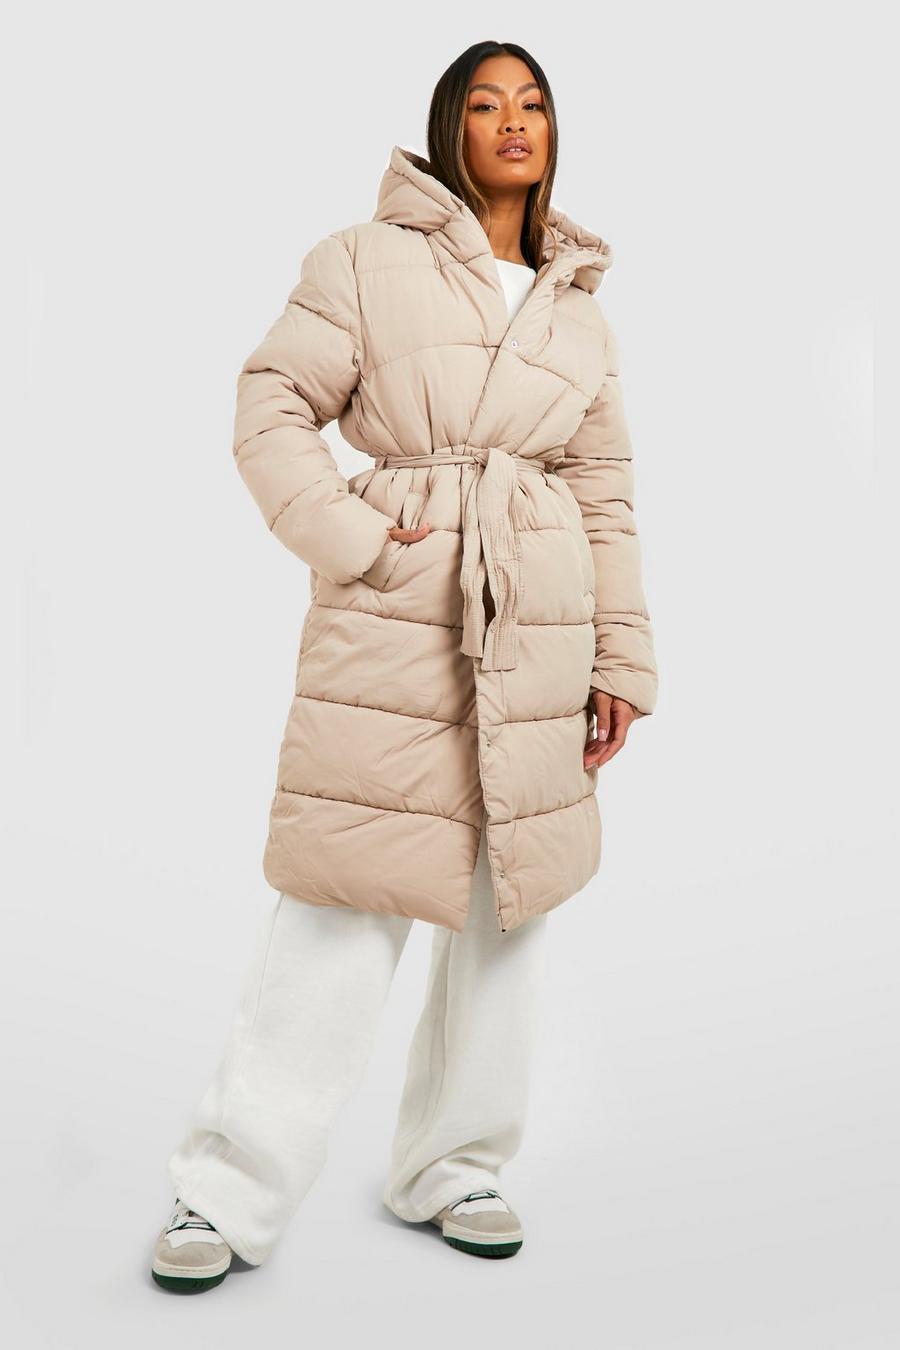 DanceeMangoo Long Parkas Winter Puffer Jacket Women Thicken Warm Bubble Coat  Oversized Outerwear Korean Autumn Casual Jackets 